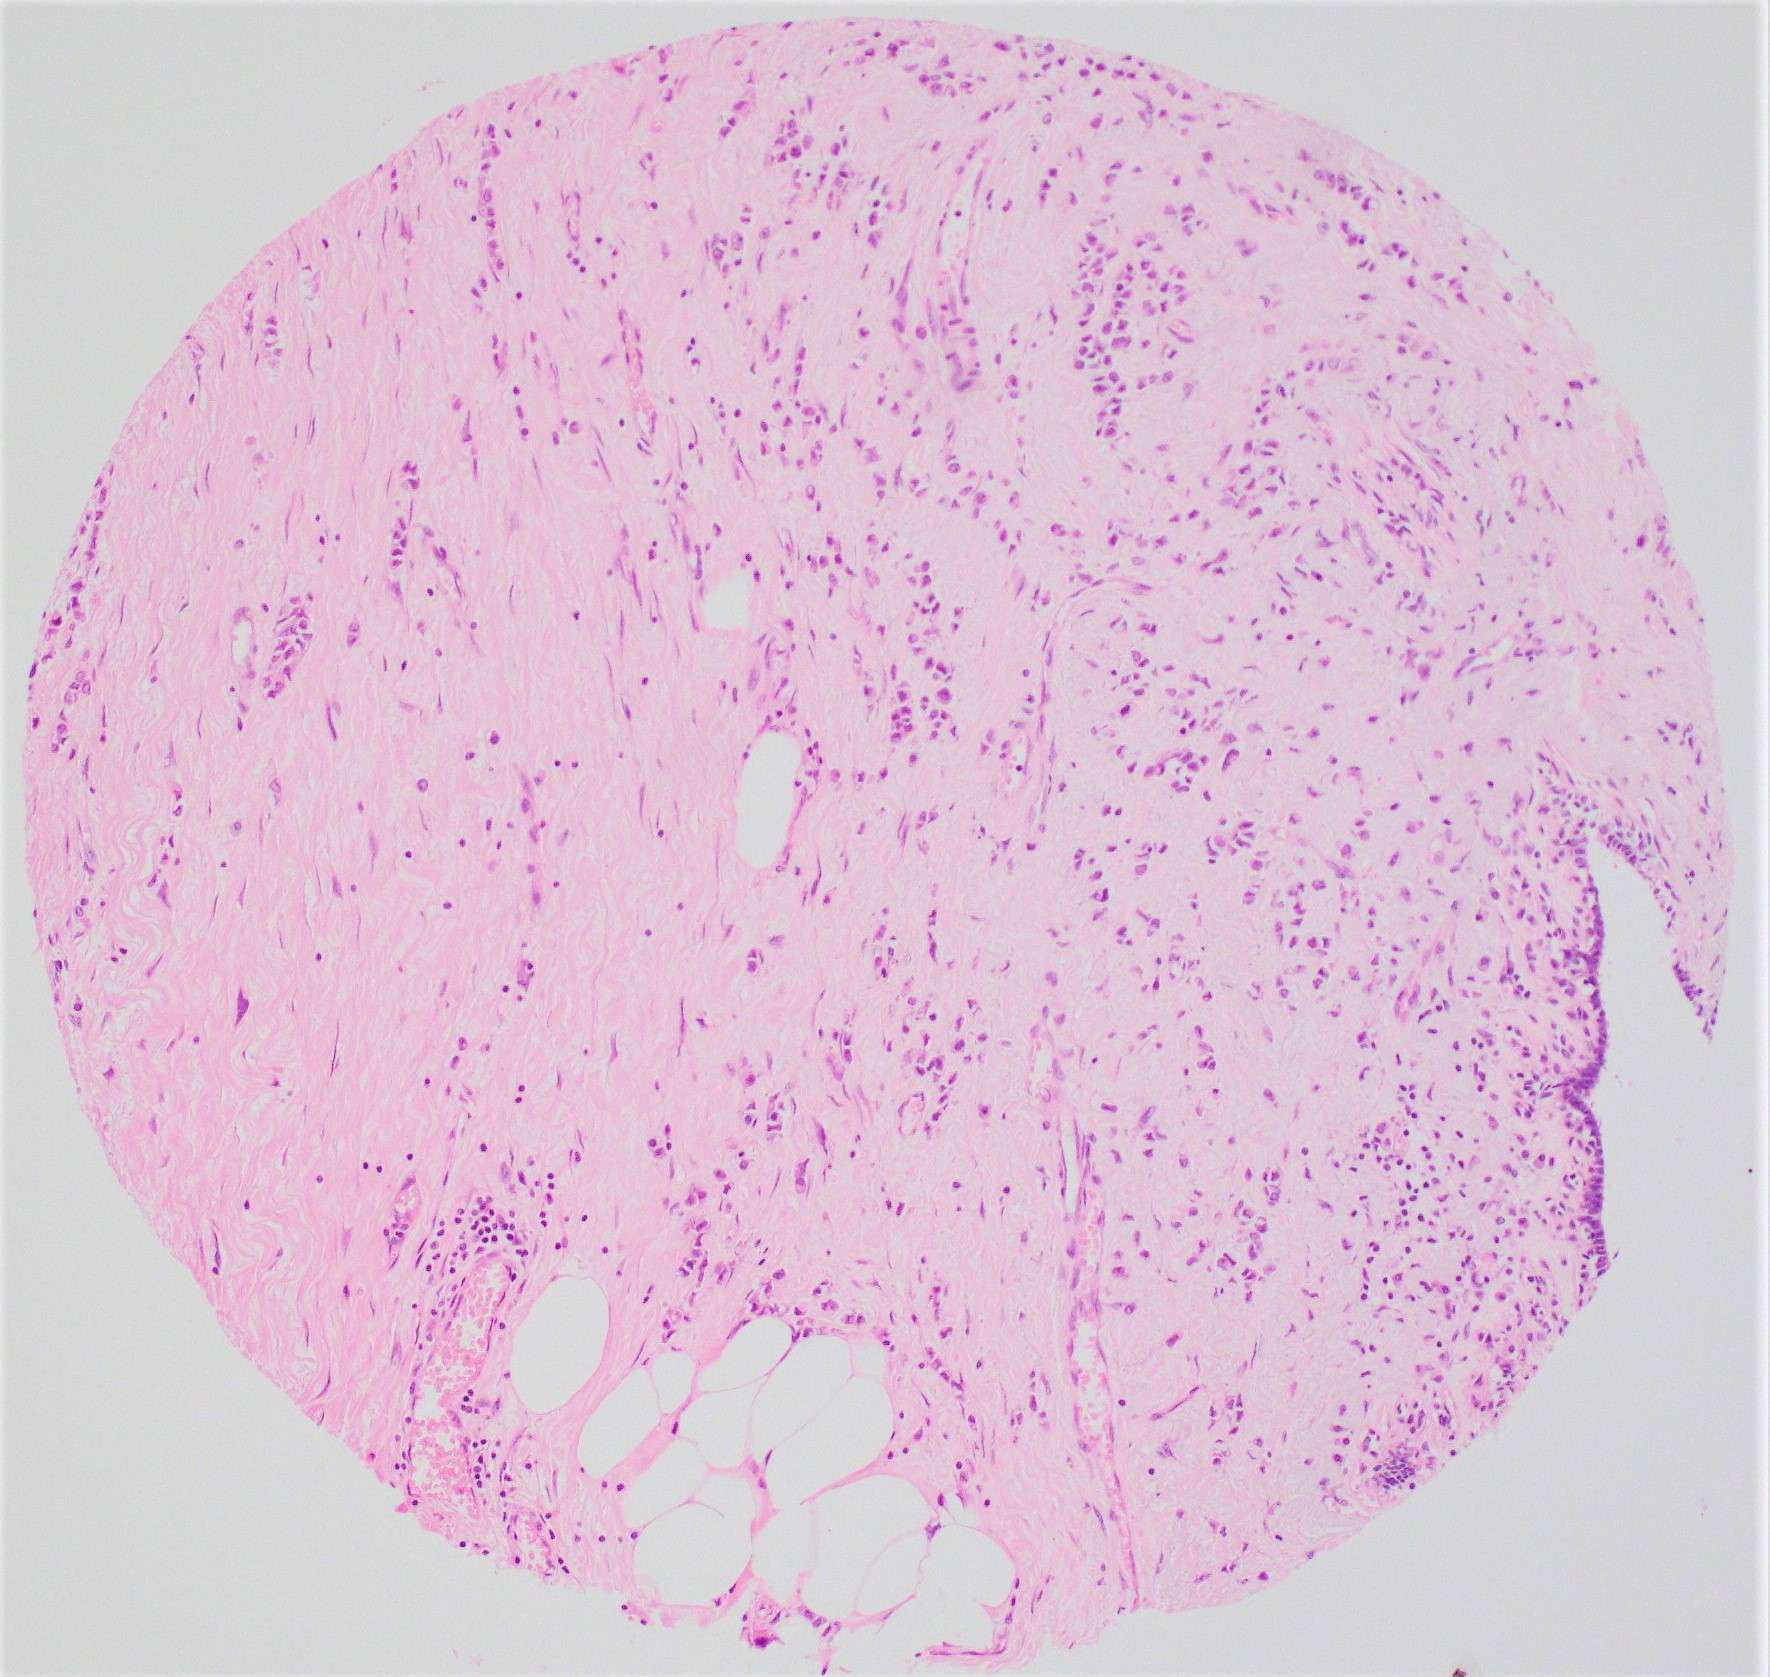 S11 2745 invasive lobular carcinoma 10x